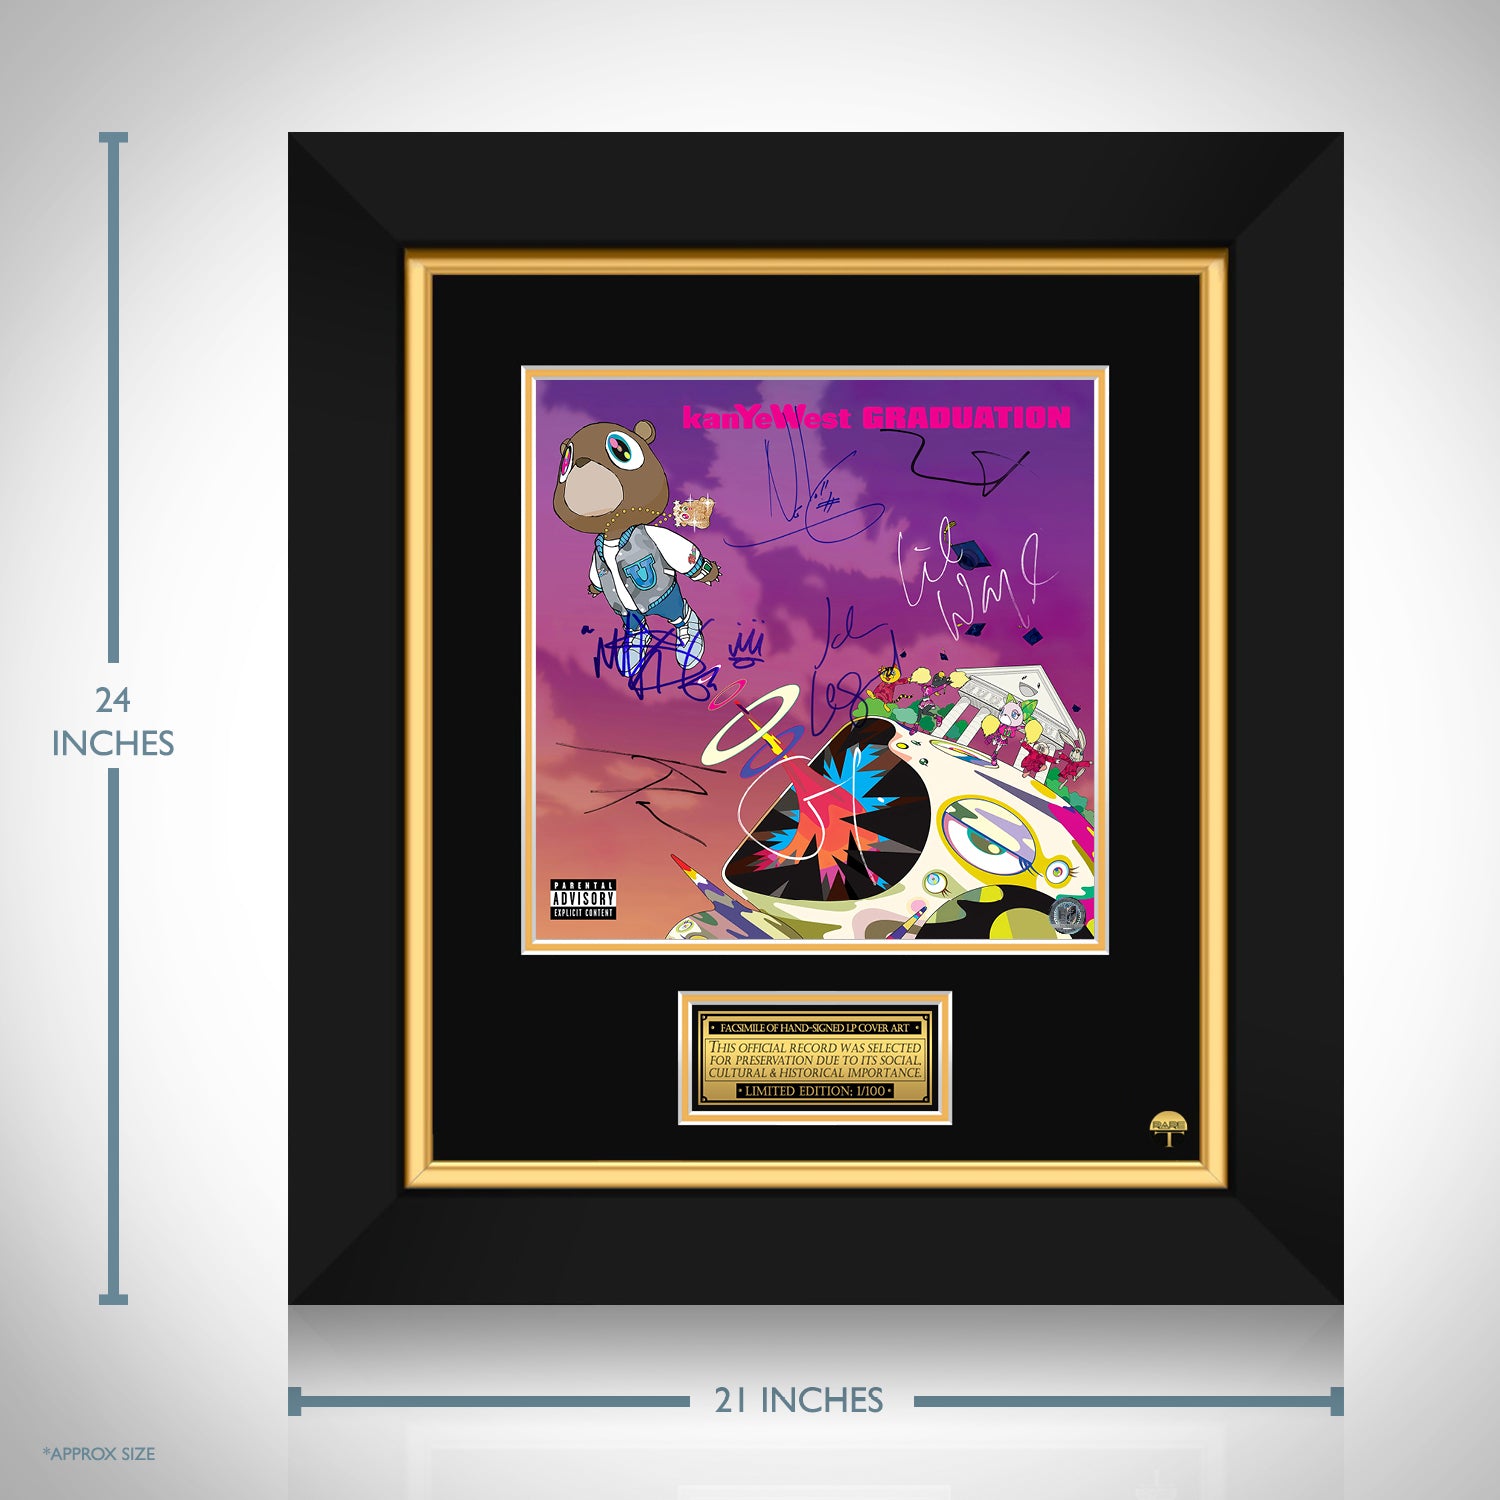 Kanye West - Graduation LP Cover Limited Signature Edition Custom